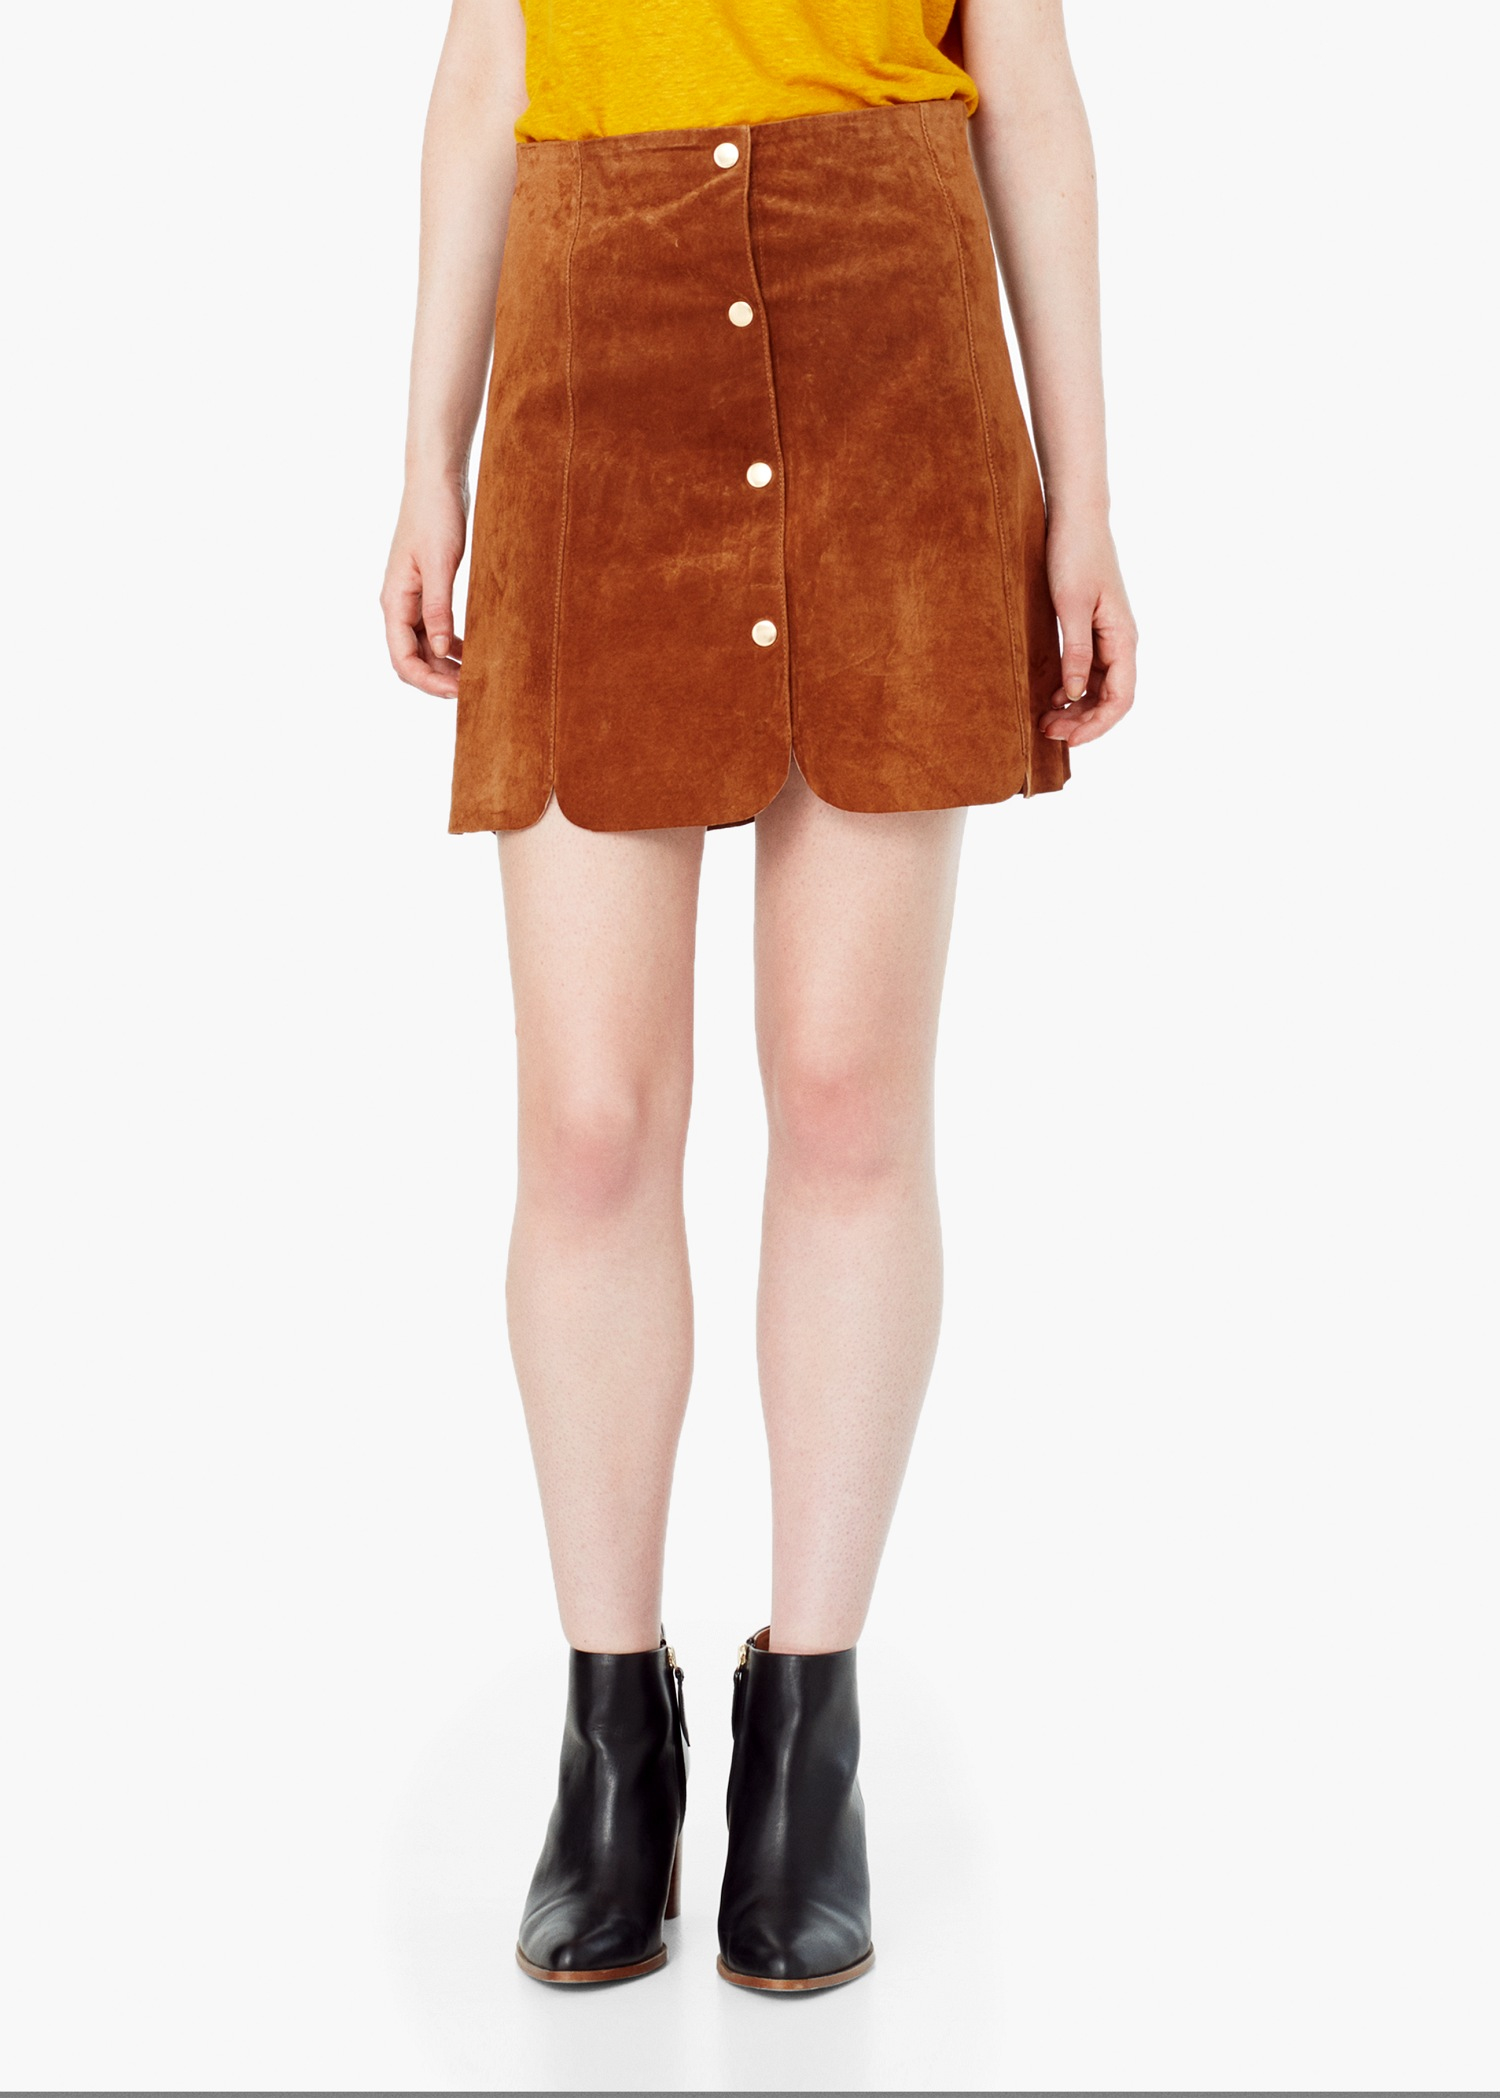 Lyst - Mango Suede Skirt in Brown